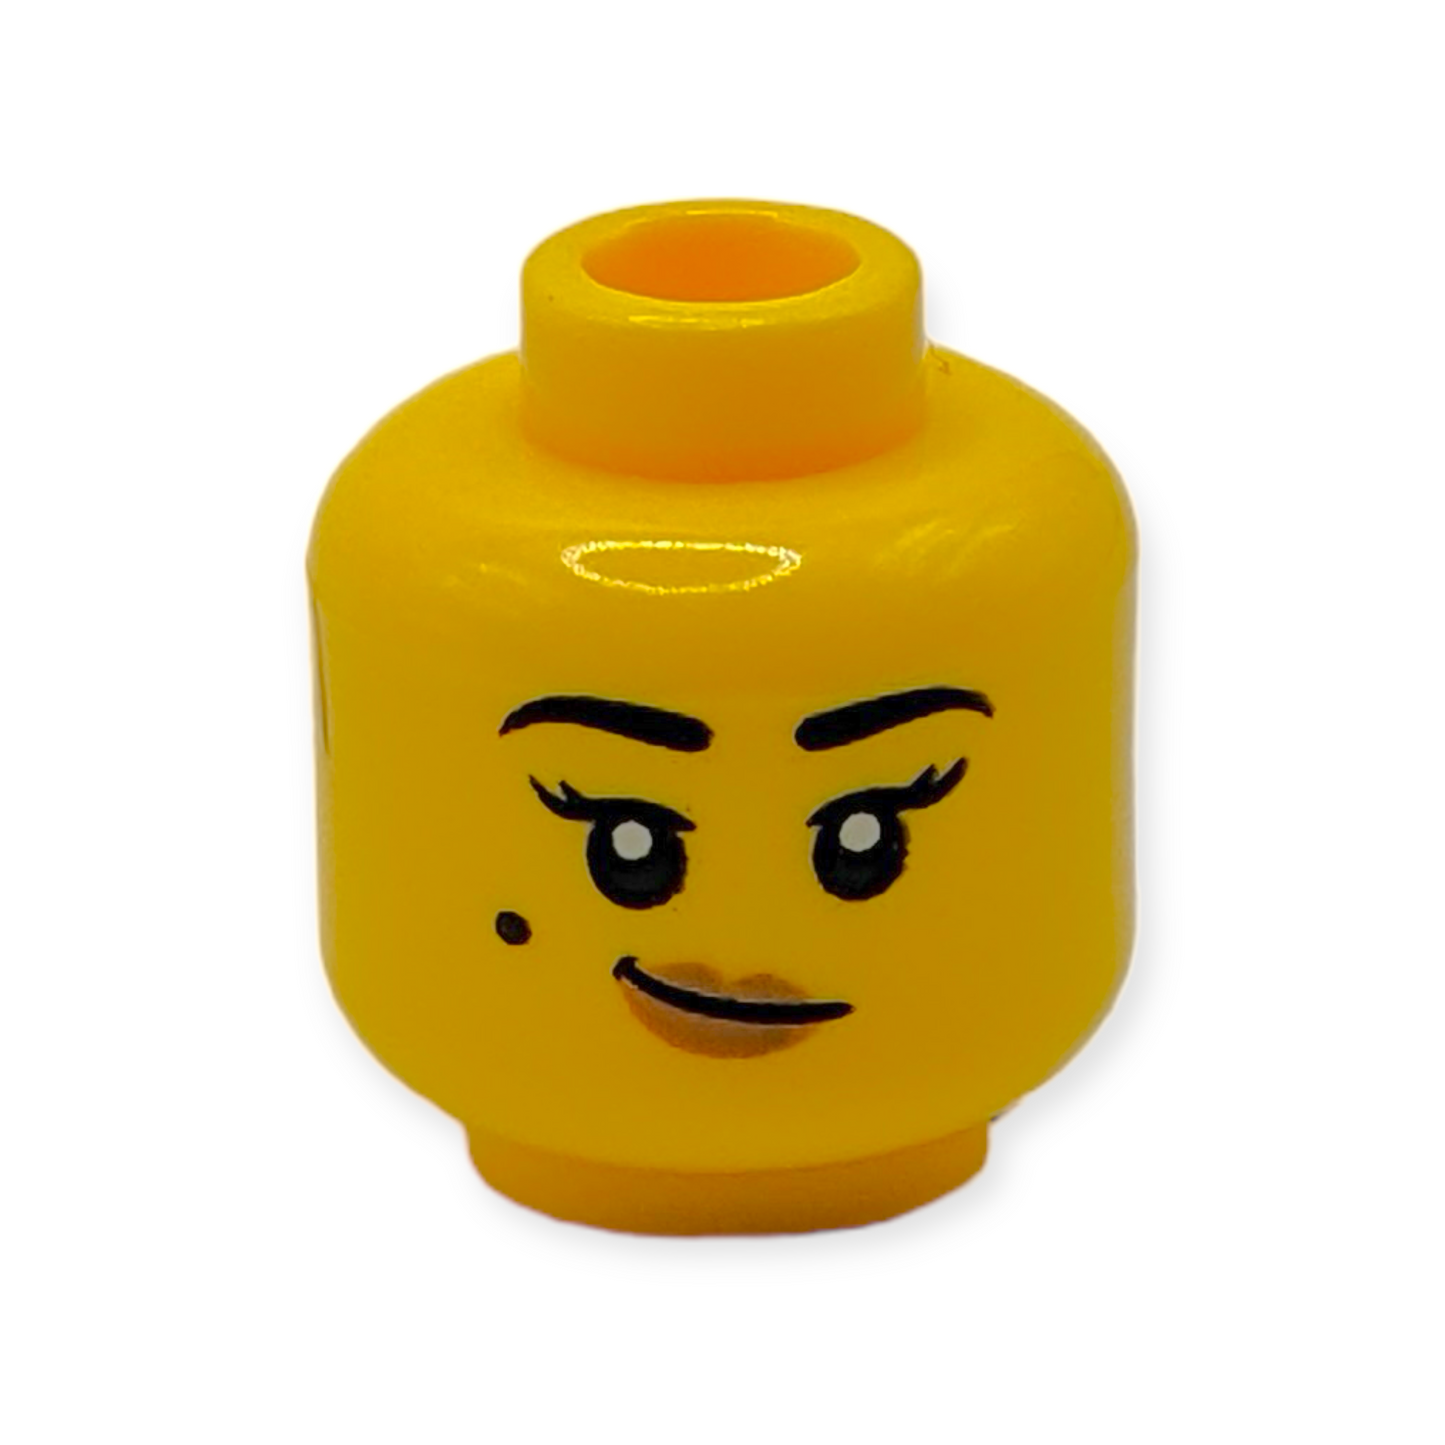 LEGO Head- 3602 Dual Sided Female Black Eyebrows and Beauty Mark